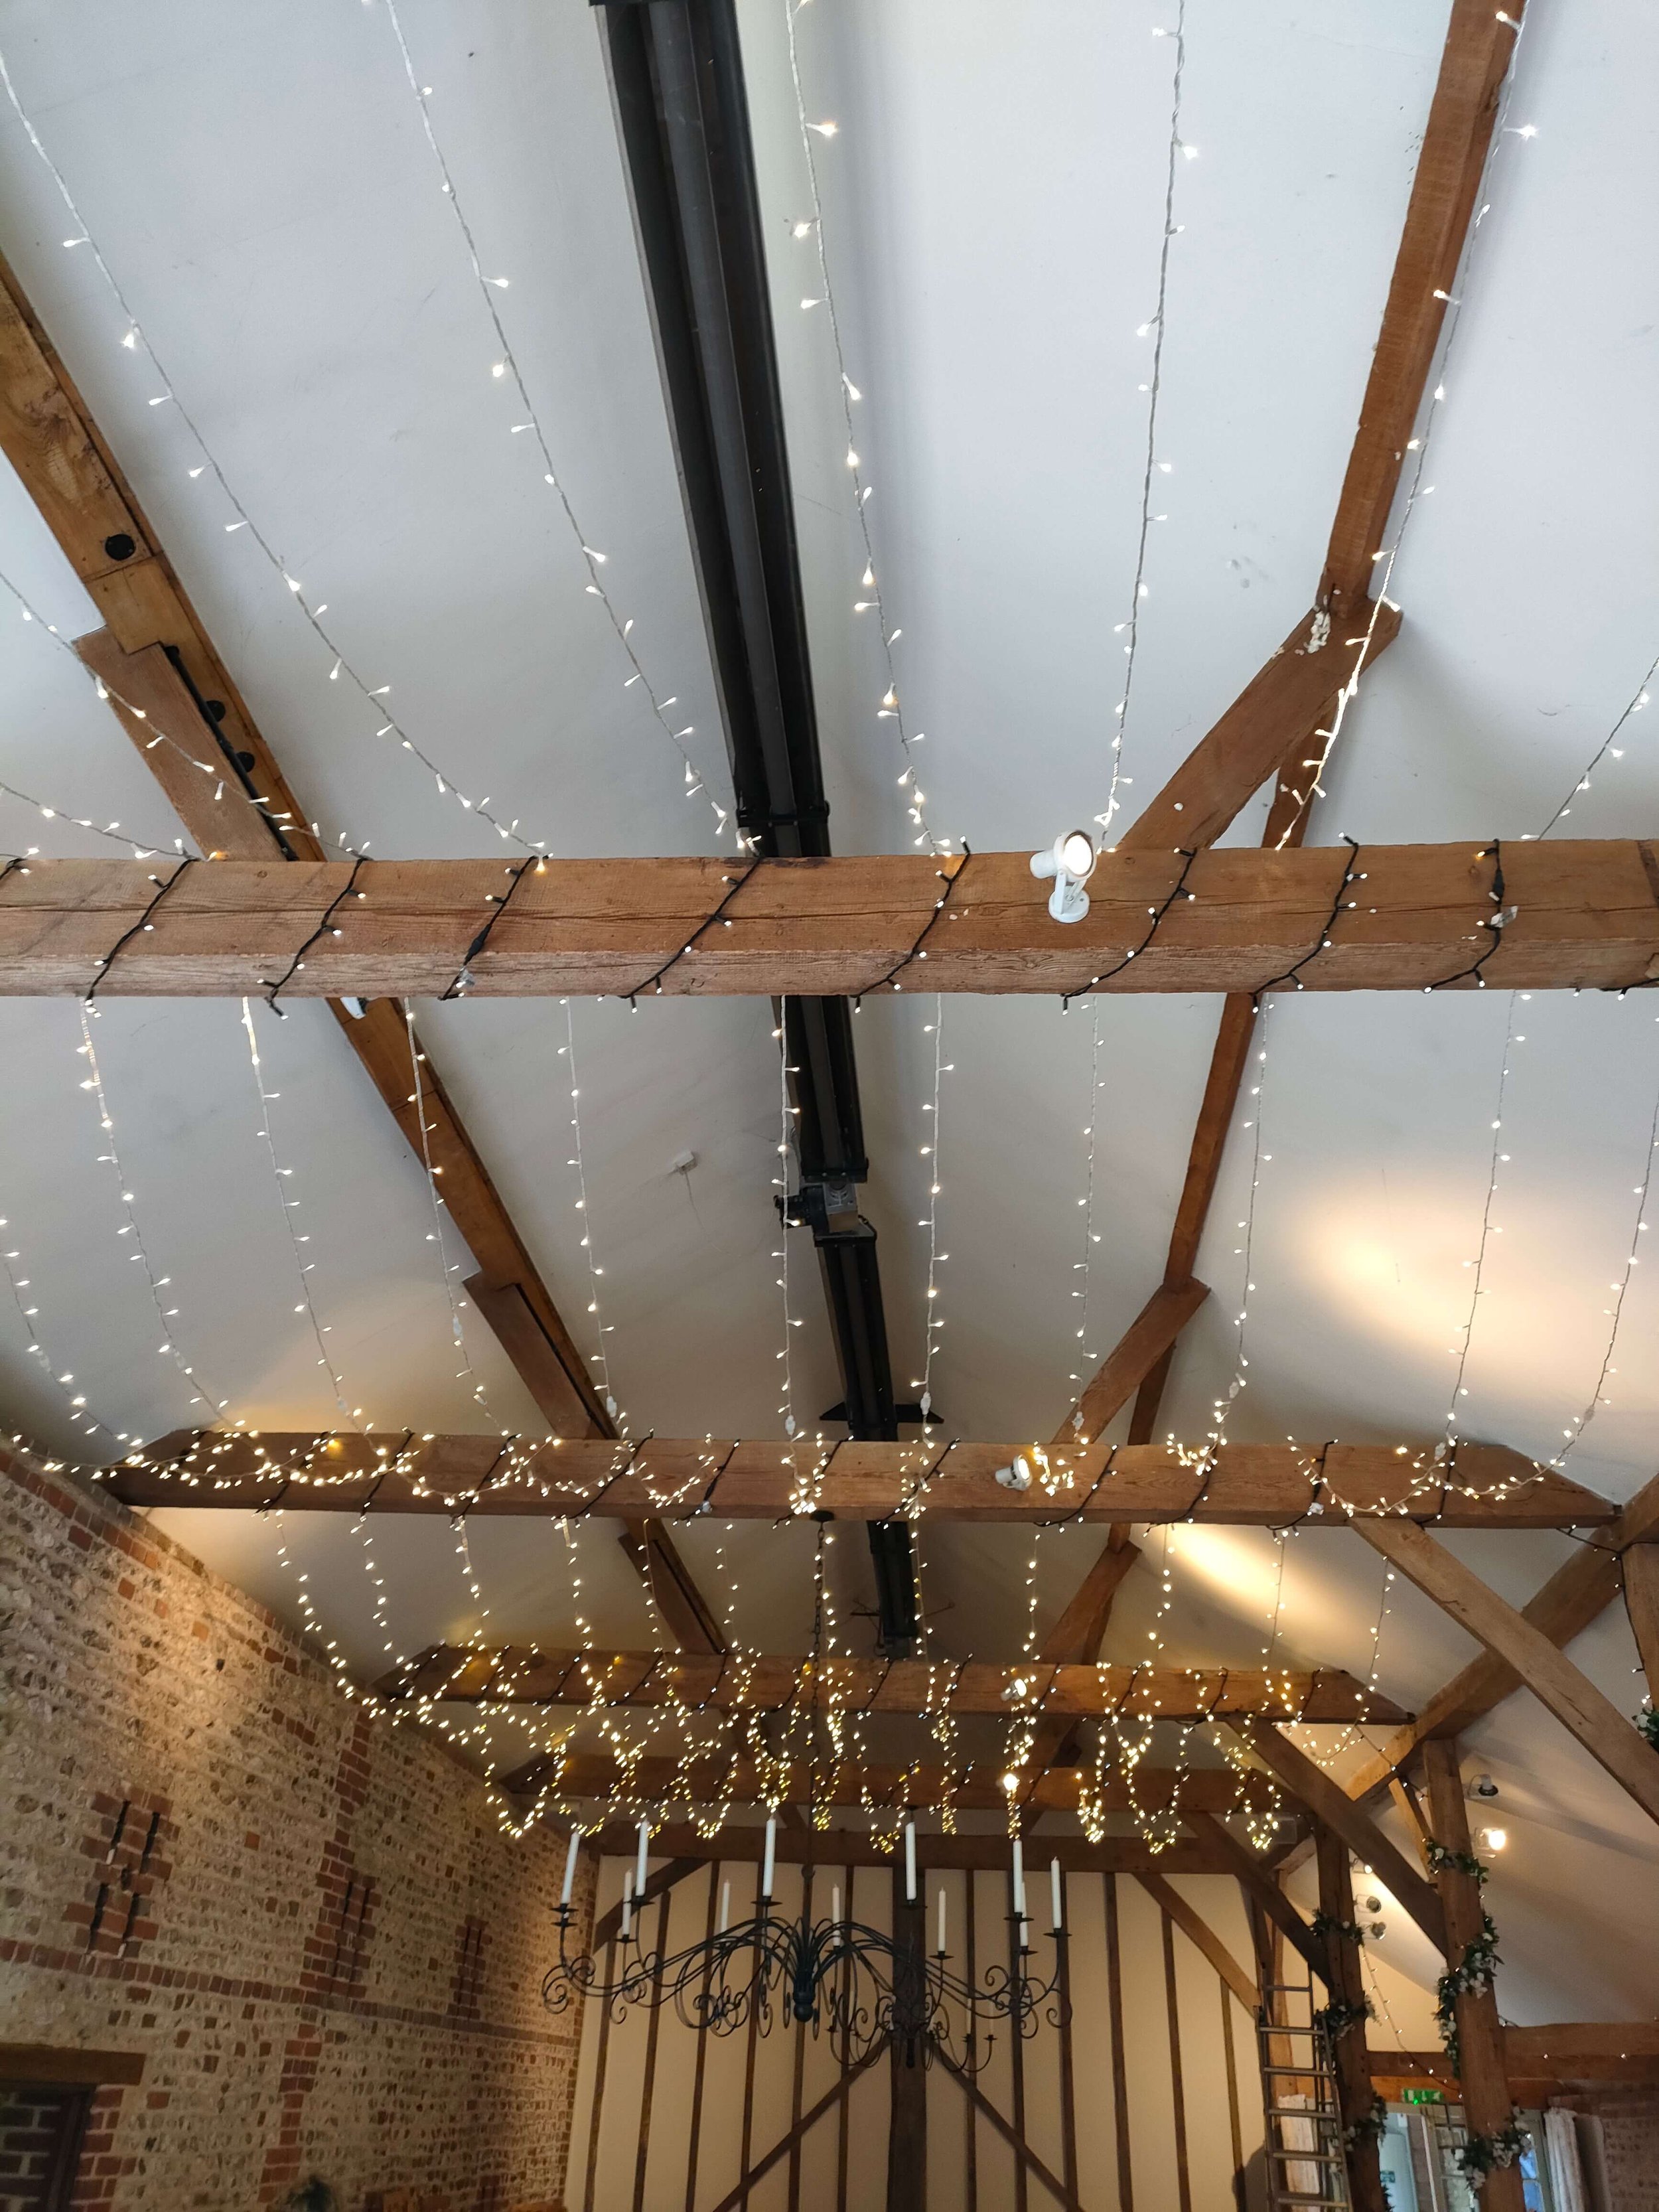 Upwaltham_barns_fairy_light_ceiling_sc.jpg